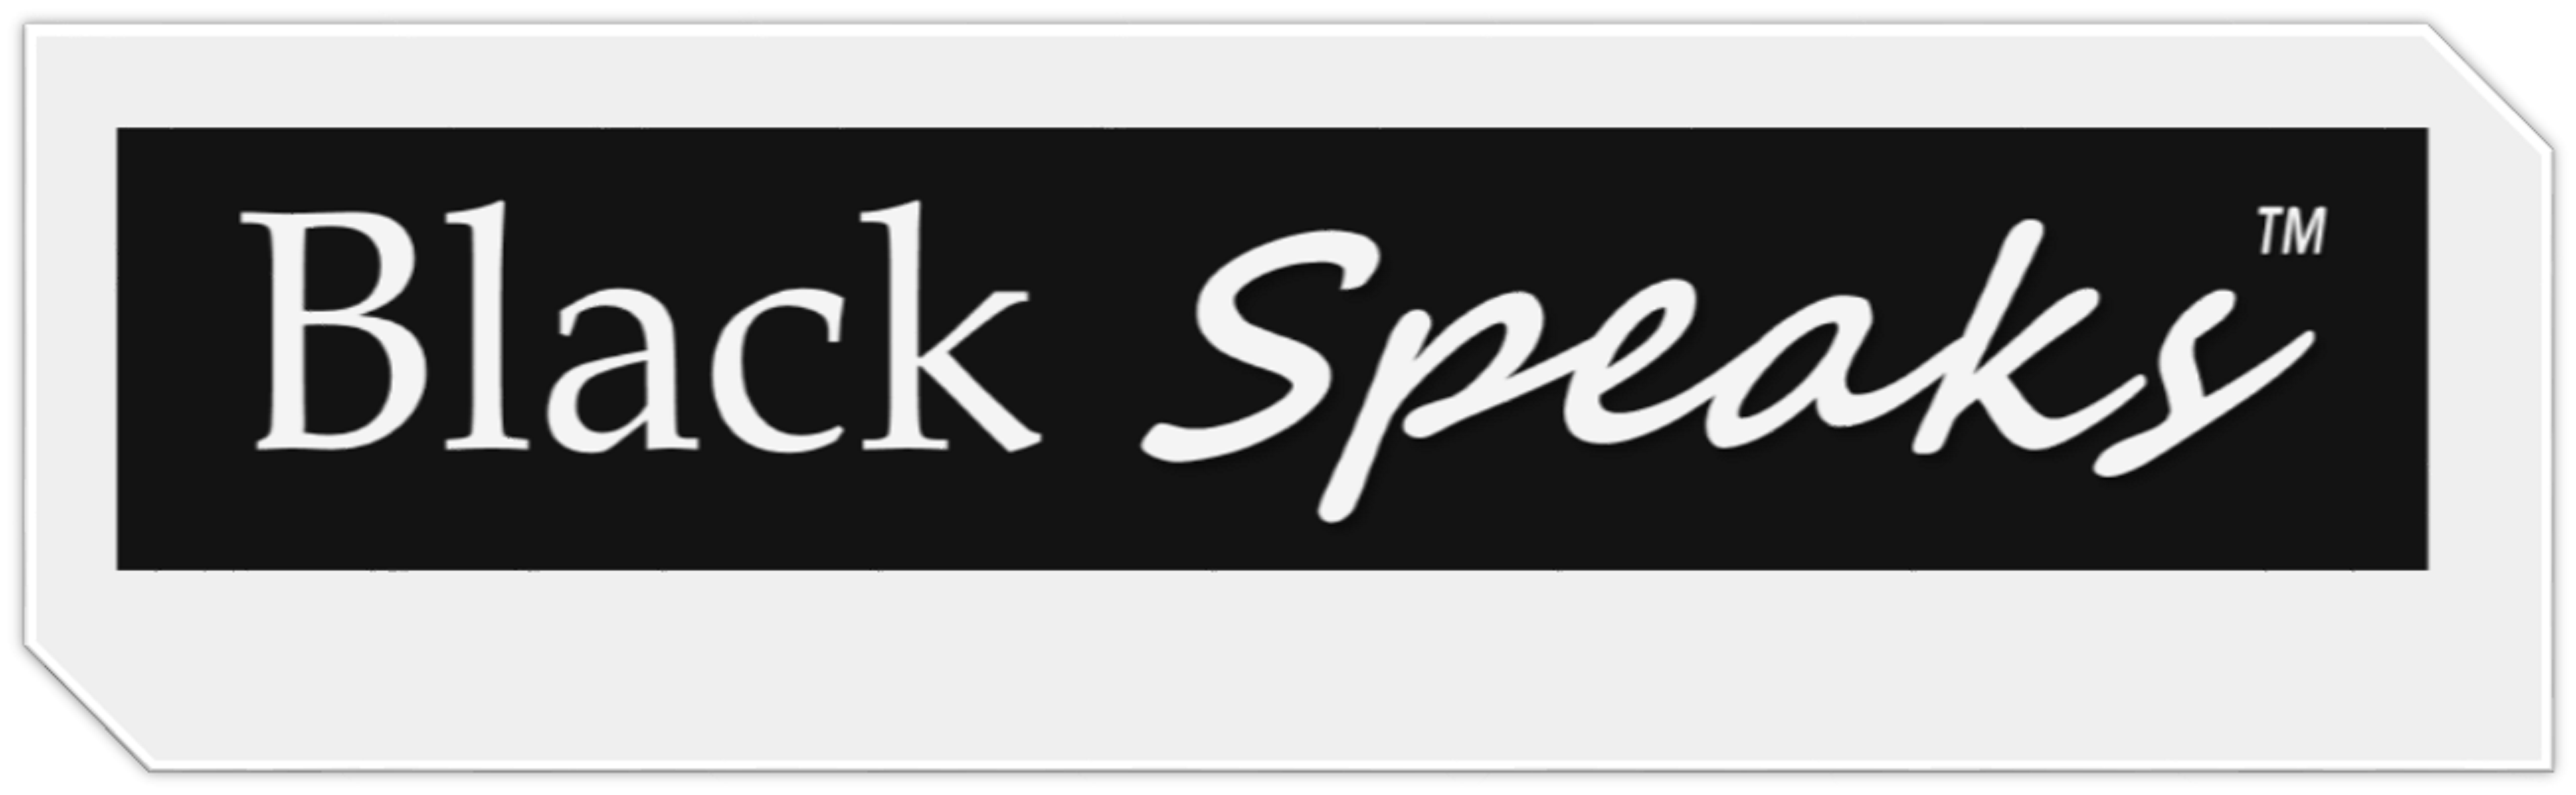 BlackSpeaks.com Offers Business Directory  Listing For Guest Columnists, Professionals